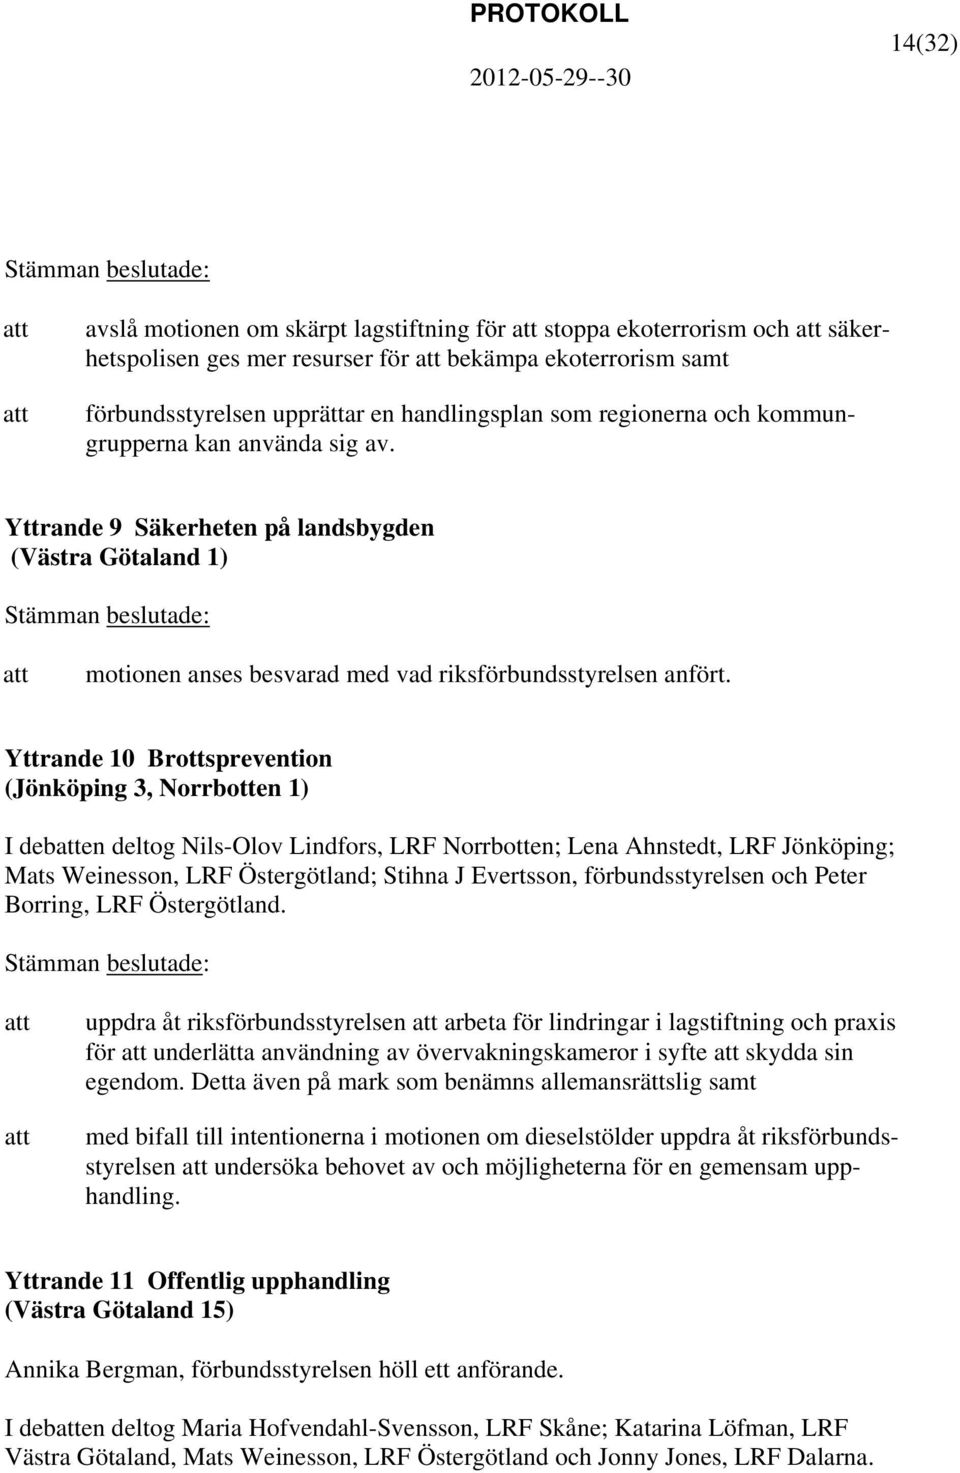 Yttrande 10 Brottsprevention (Jönköping 3, Norrbotten 1) I deben deltog Nils-Olov Lindfors, LRF Norrbotten; Lena Ahnstedt, LRF Jönköping; Mats Weinesson, LRF Östergötland; Stihna J Evertsson,